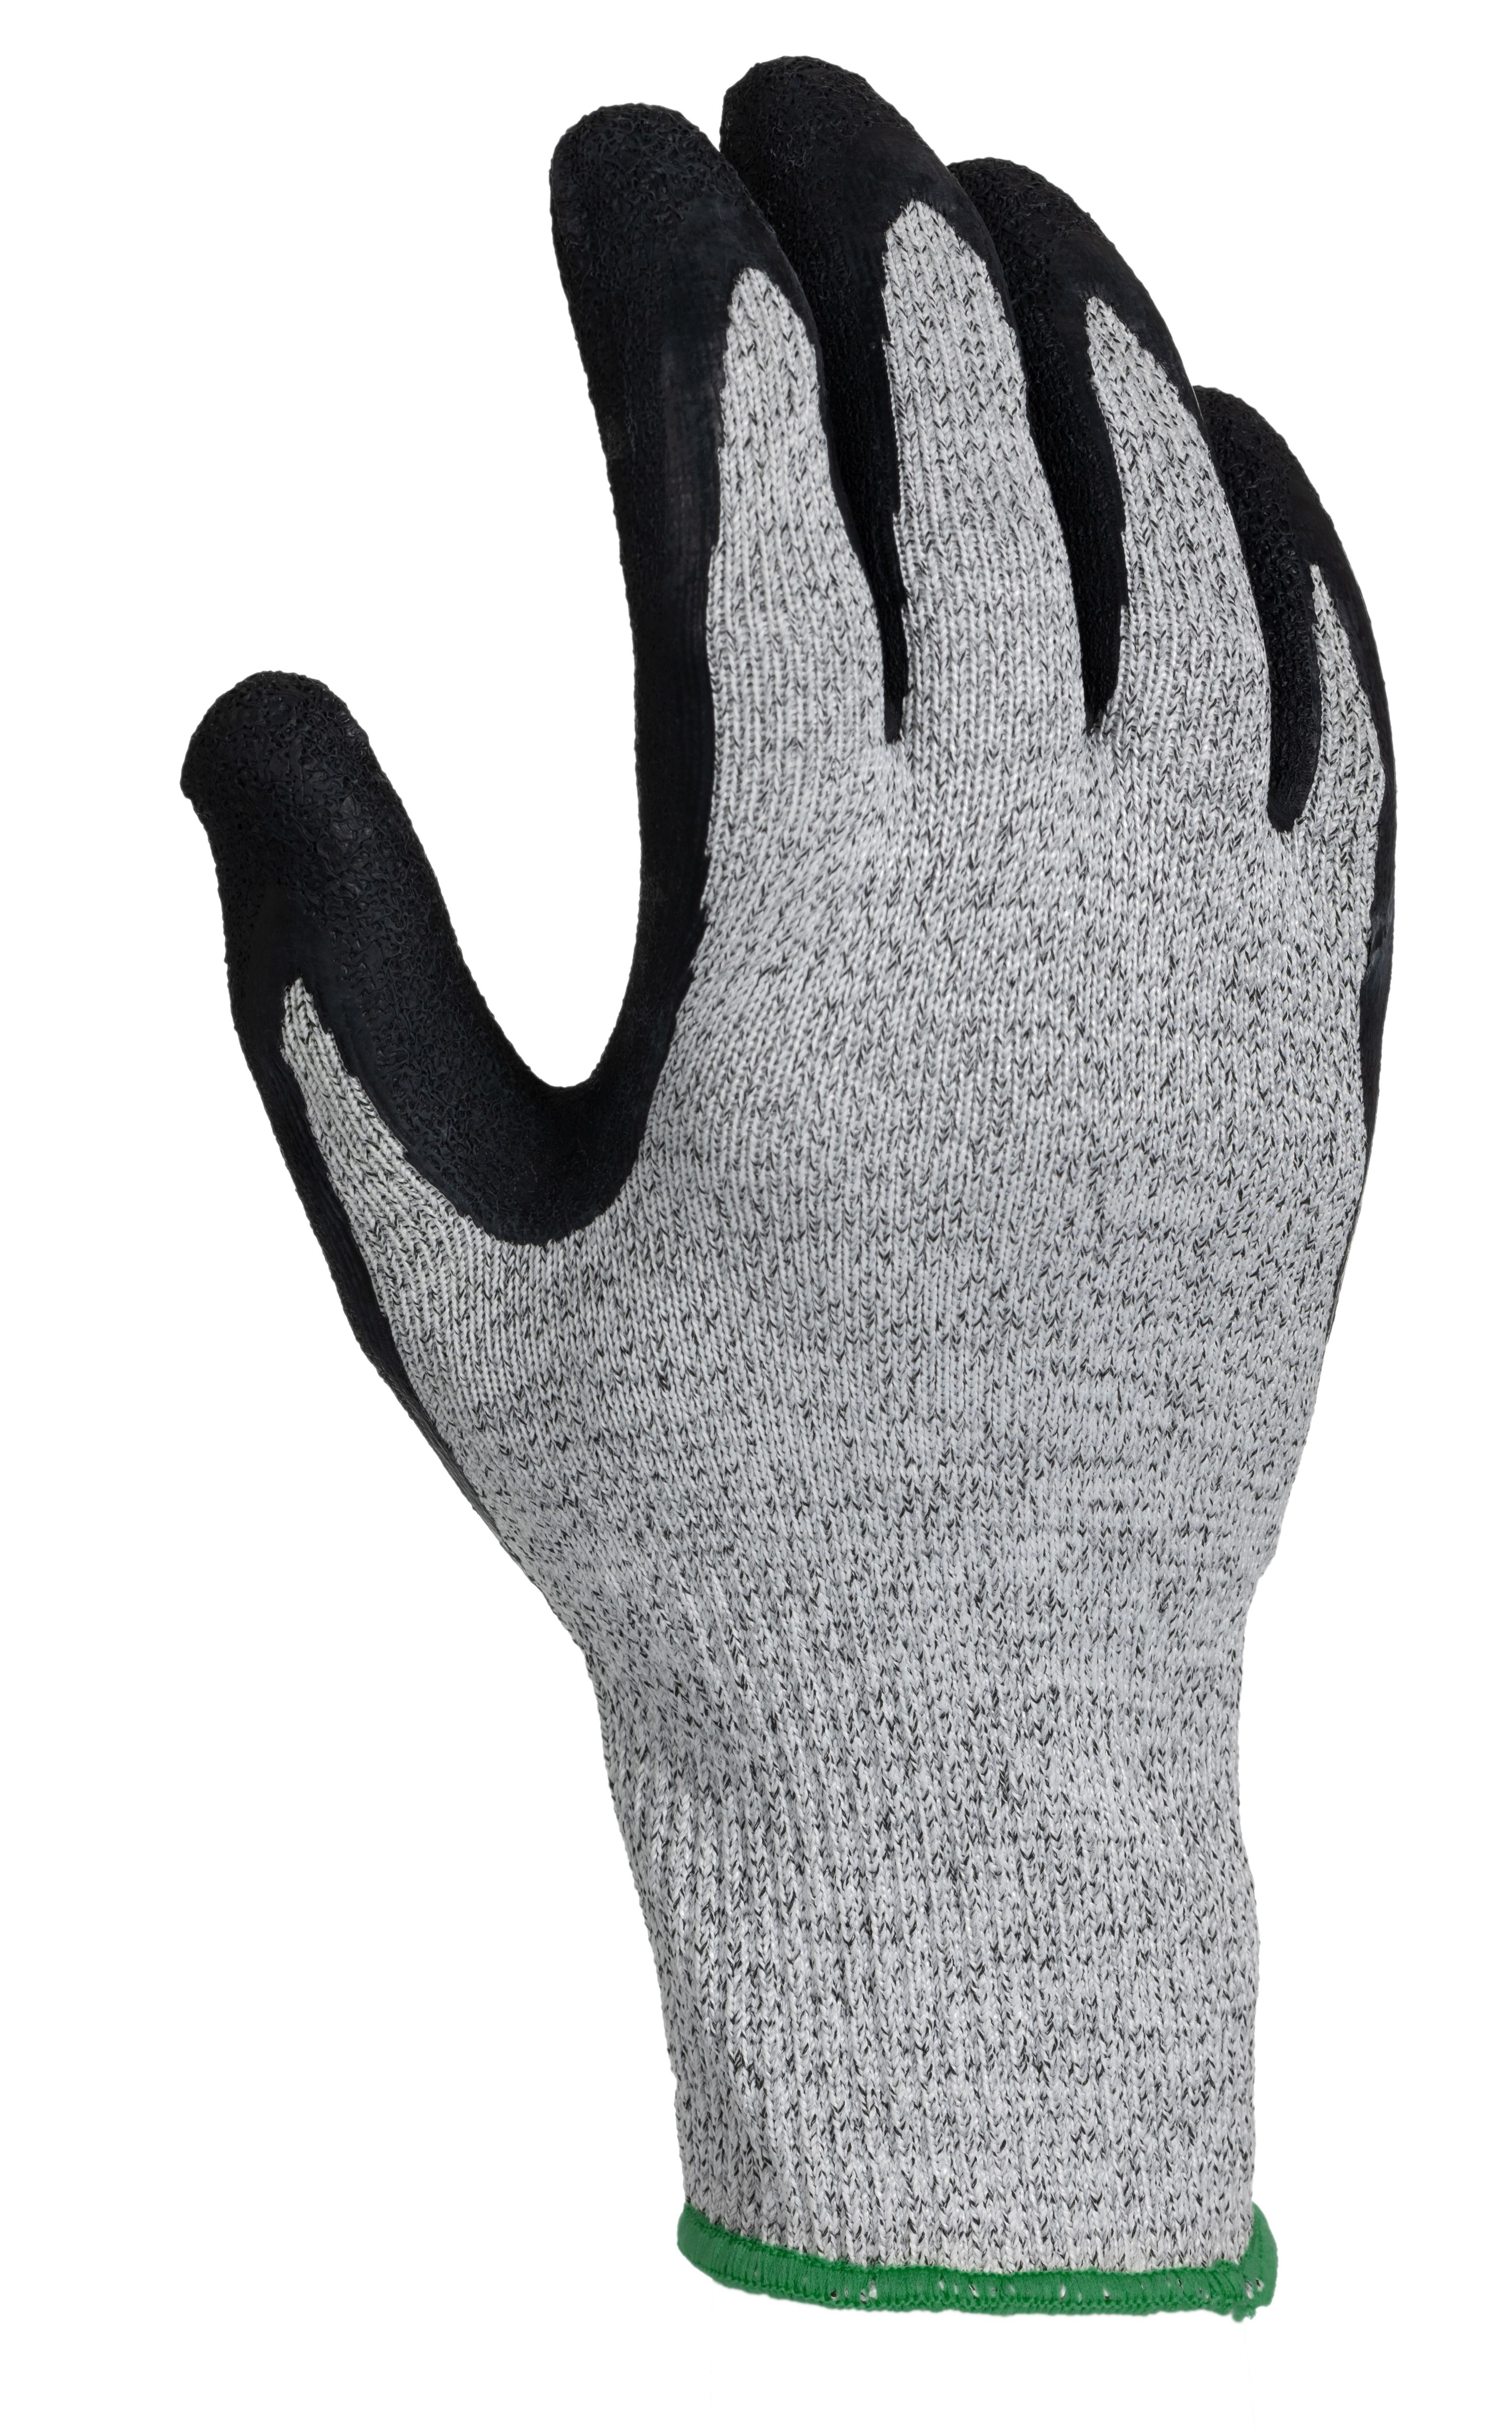 RS PRO Black Cut Resistant Work Gloves, Size 8, Medium, Latex Coating